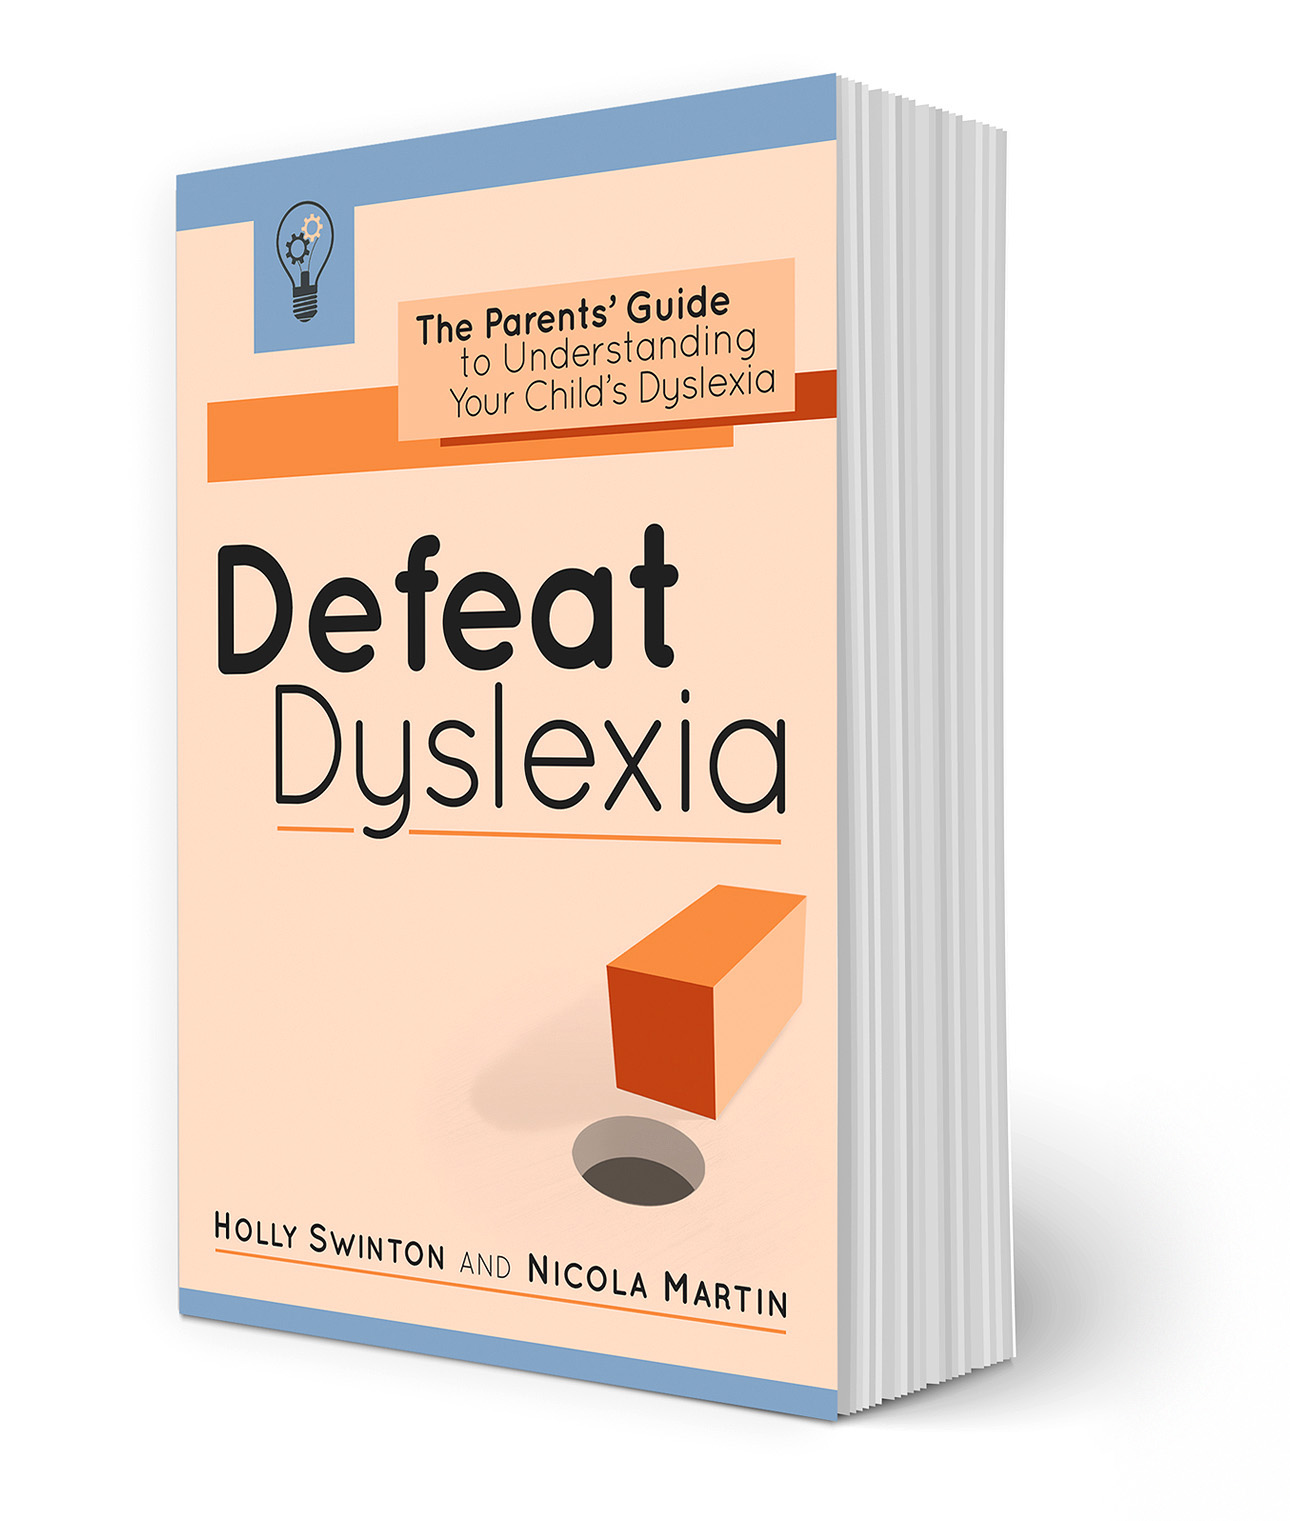 Defeat Dyslexia by Holly Swinton and Nicola Martin